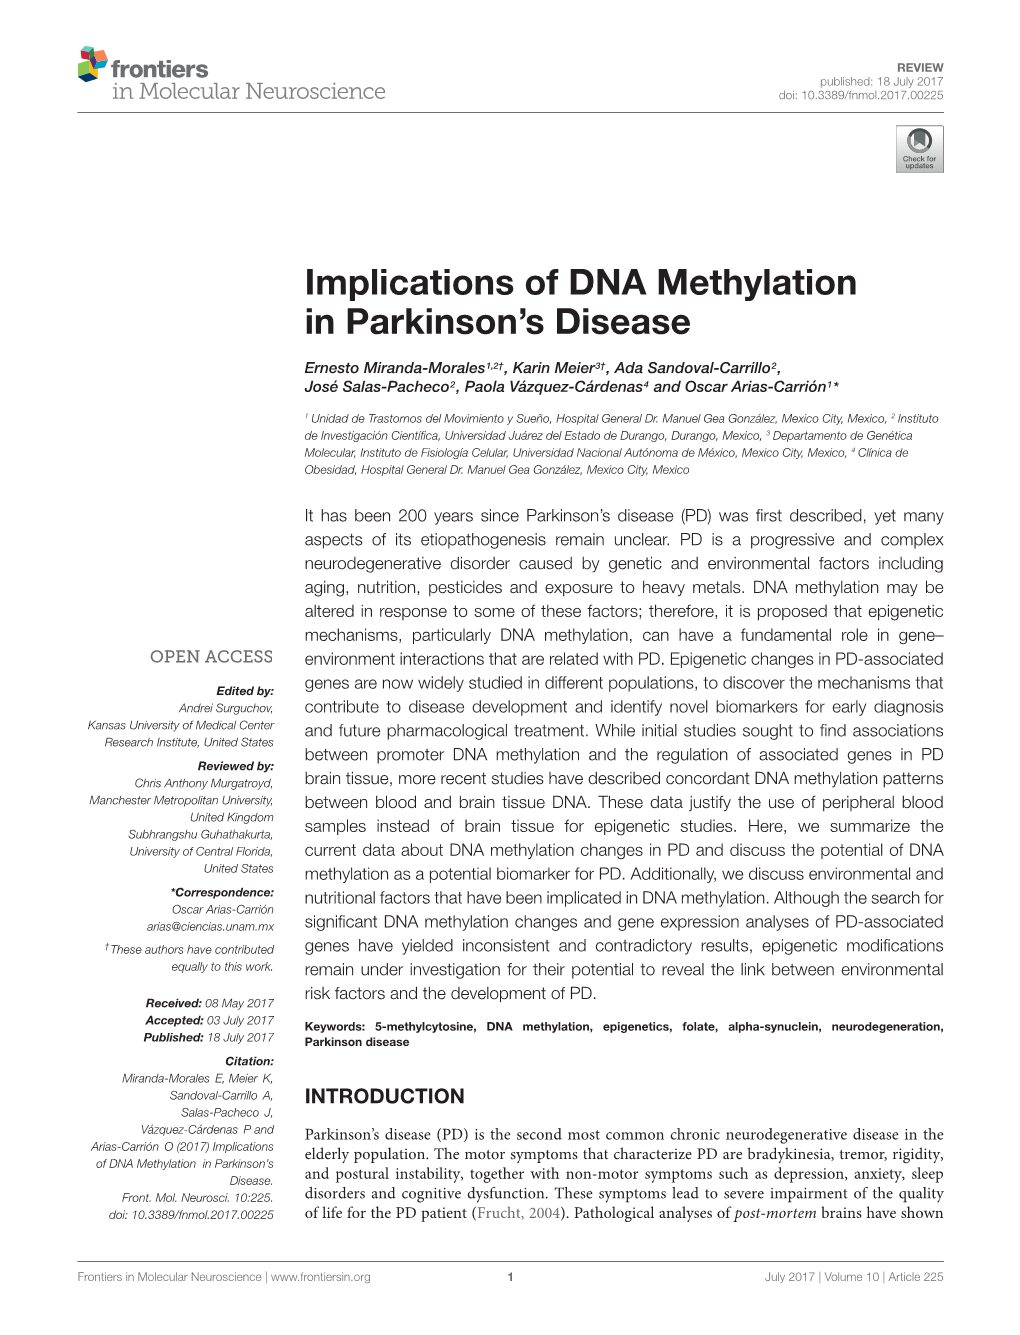 Implications of DNA Methylation in Parkinson's Disease